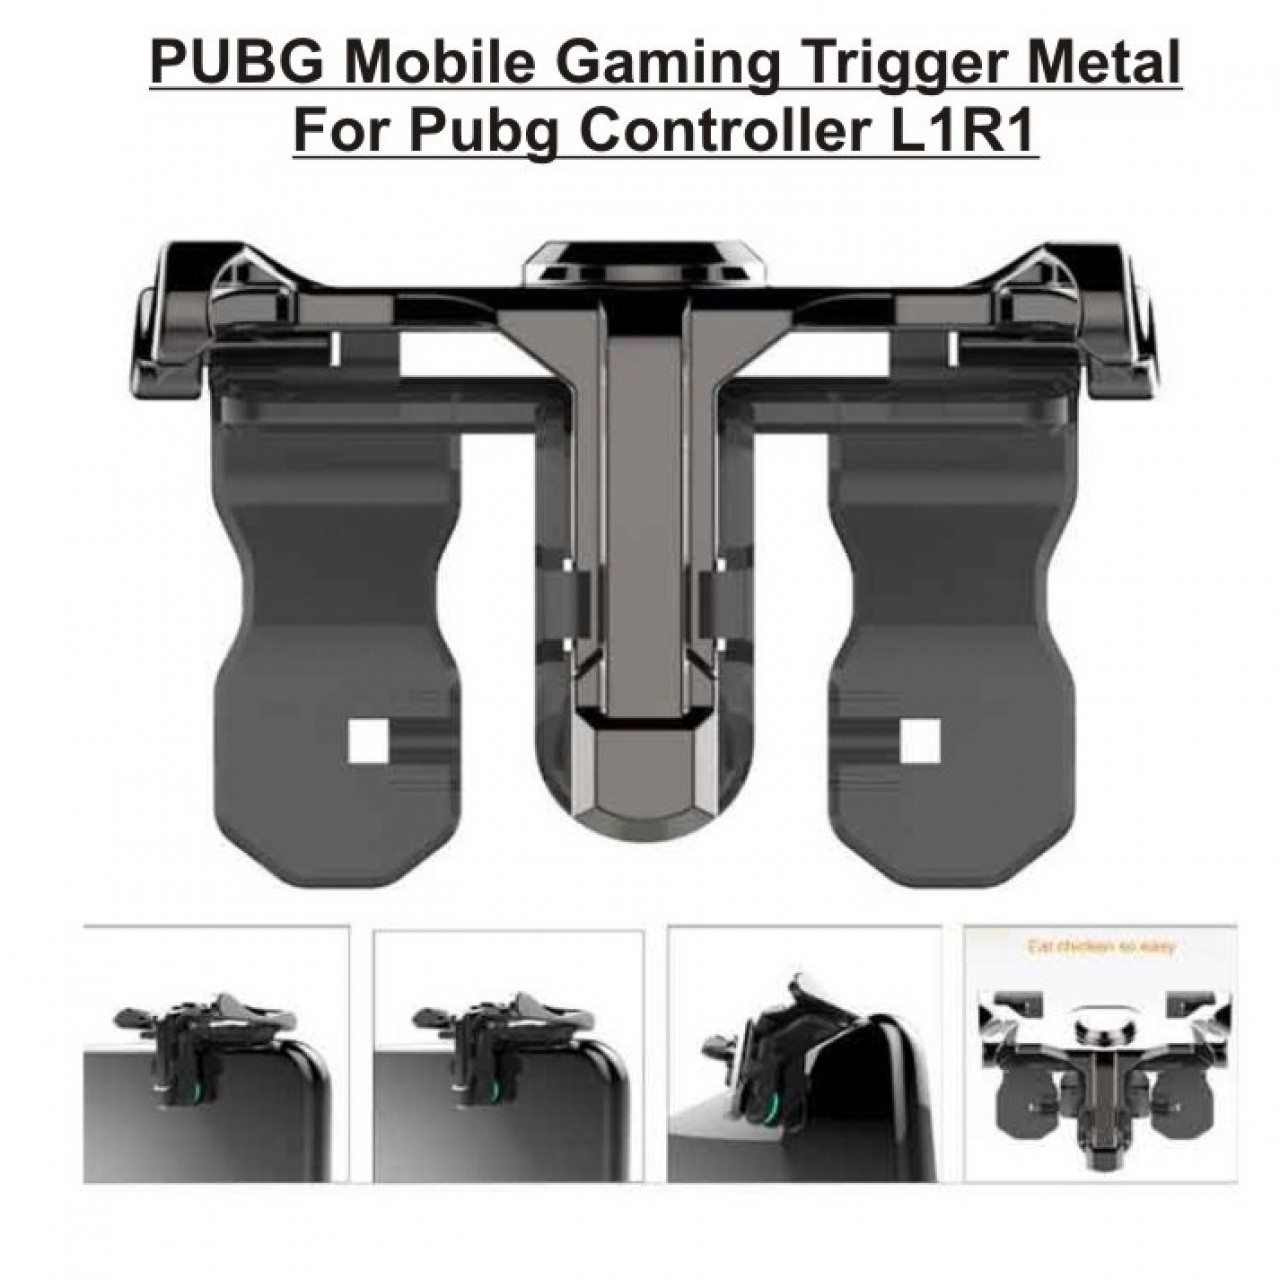 PUBG Mobile Gaming Trigger Metal For Pubg Controller L1R1